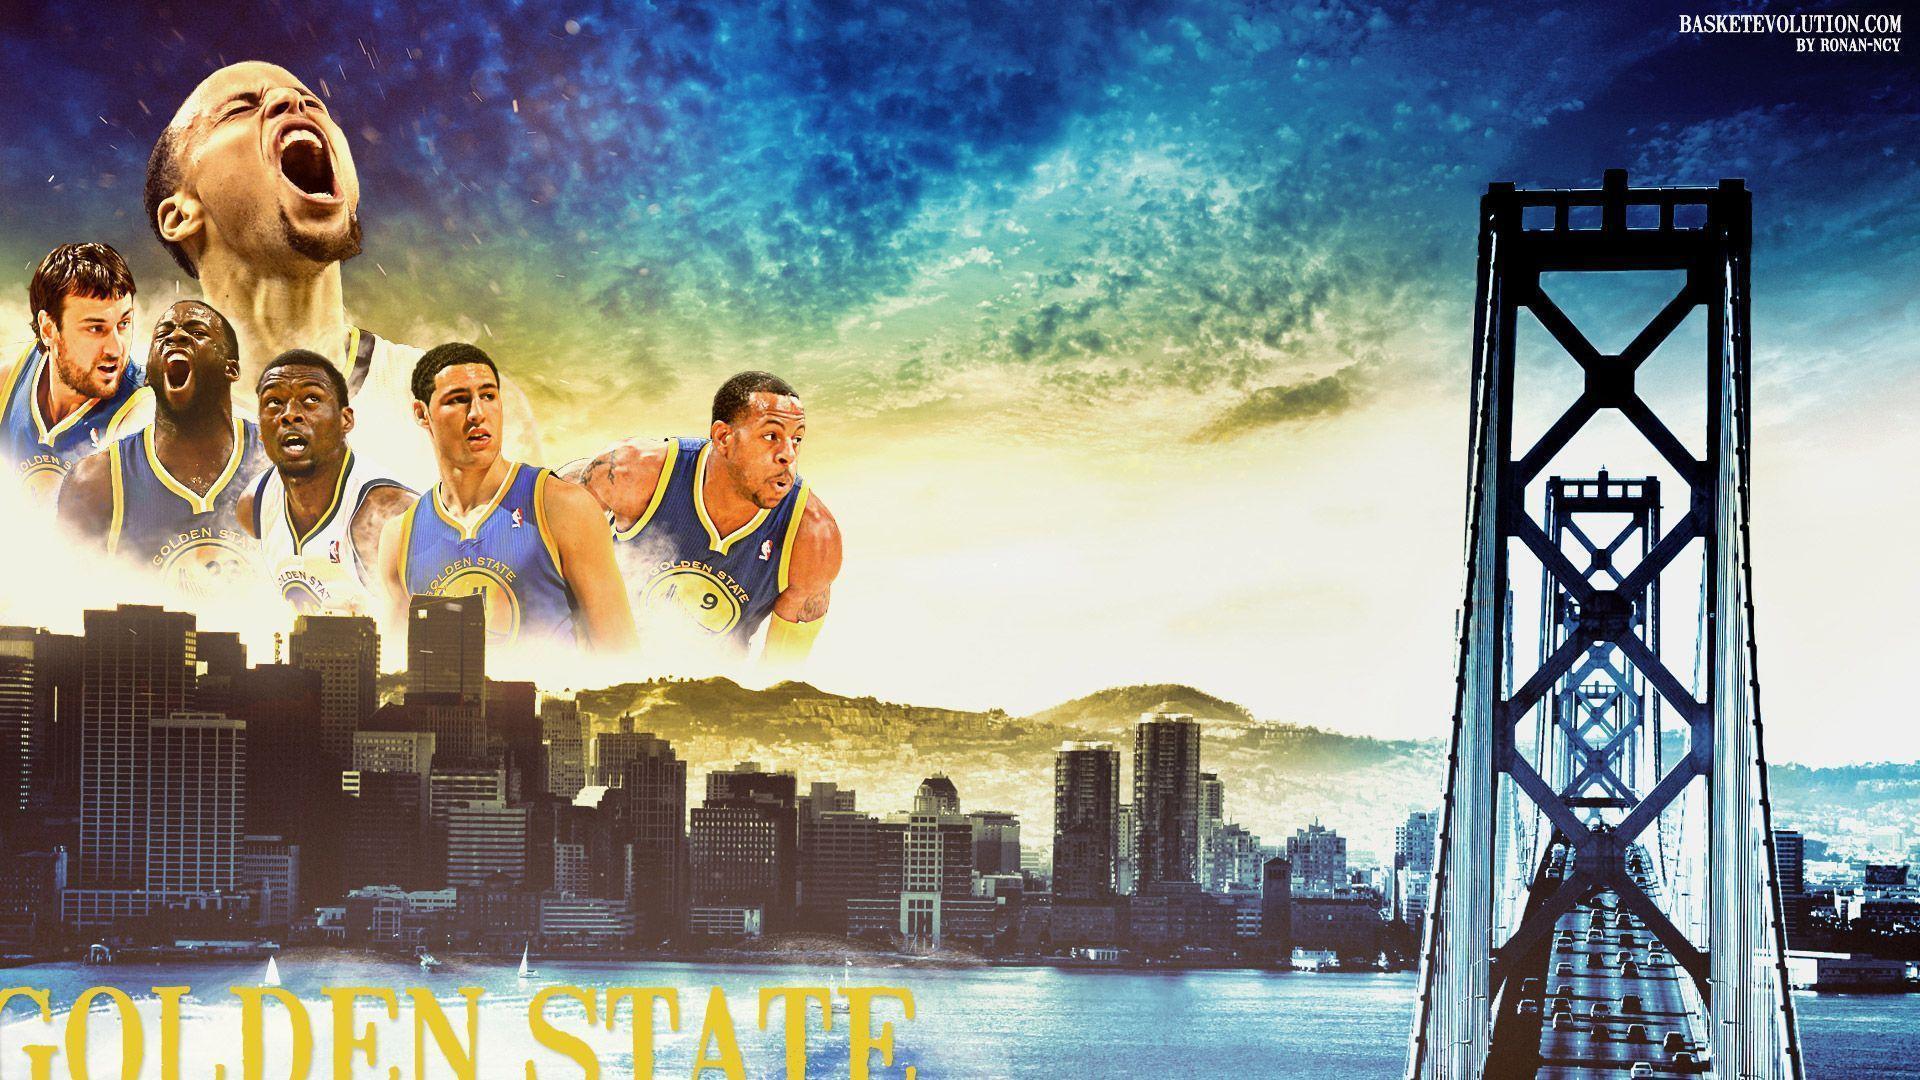 NBA Wallpaper at BasketWallpaper